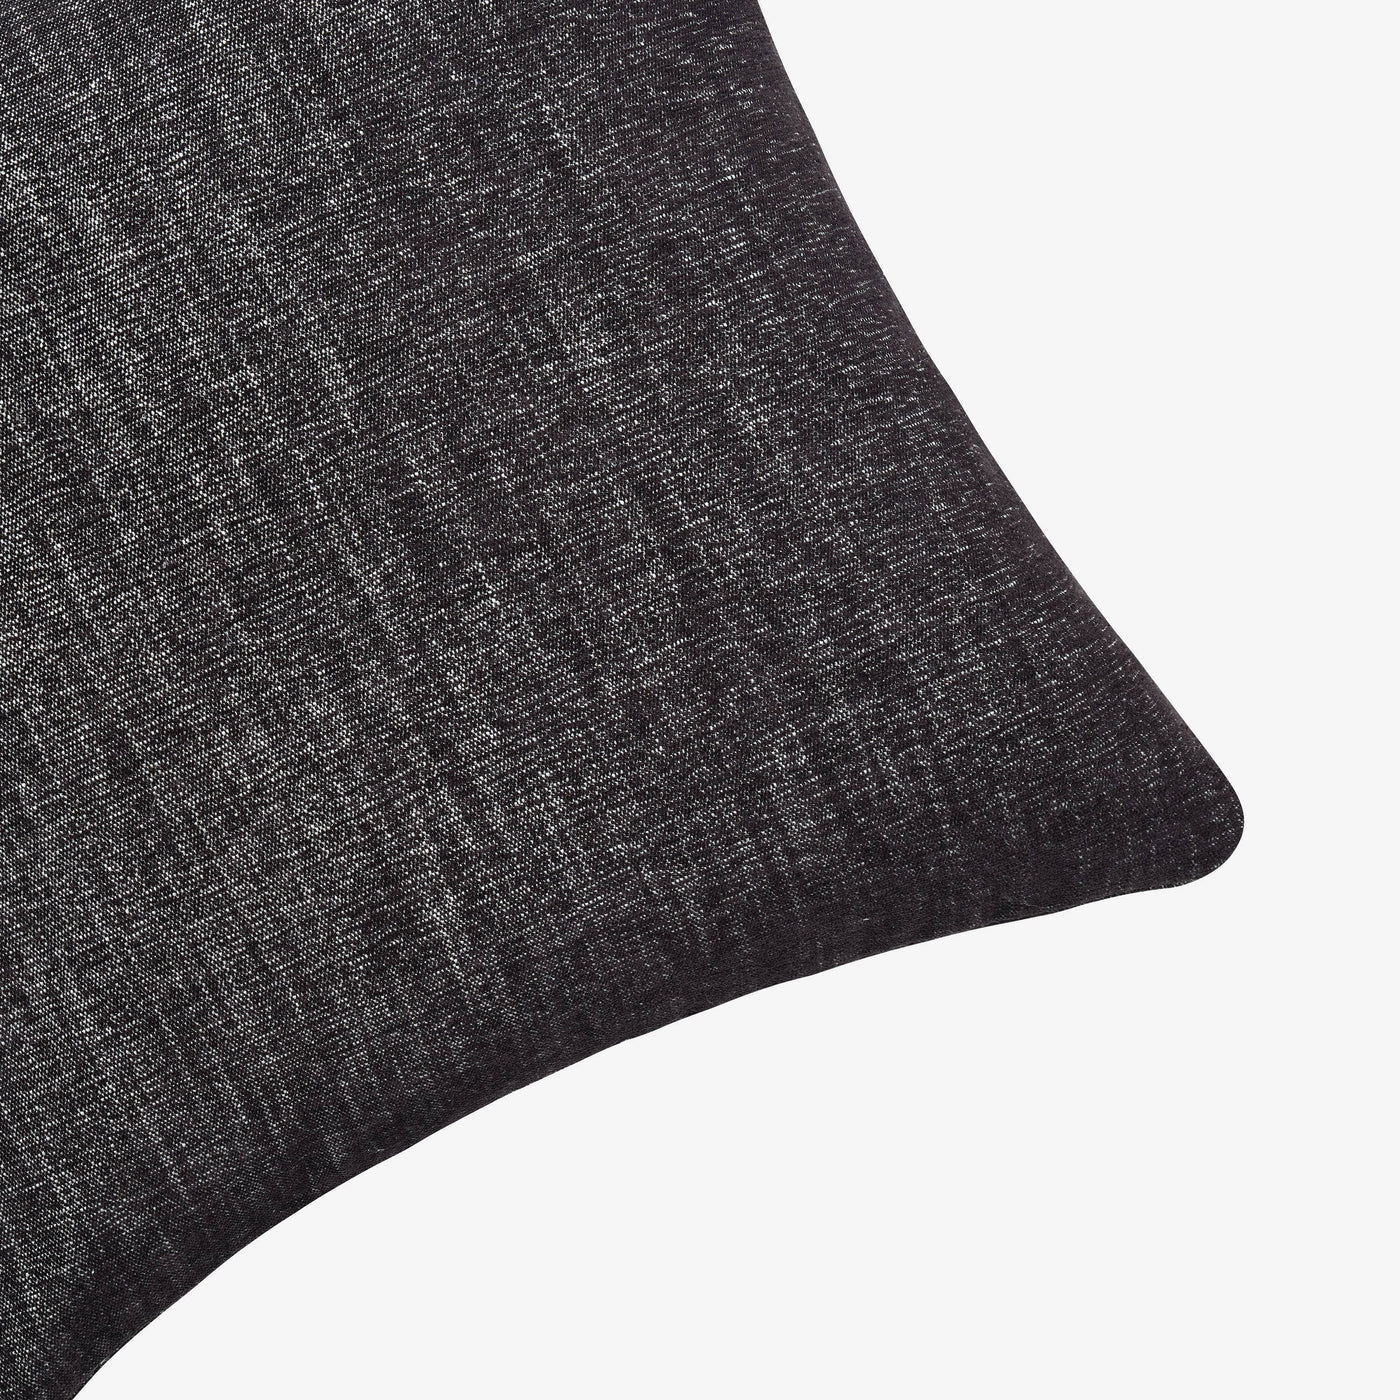 Grace Cushion Cover, Black, 45x45 cm Cushion Covers sazy.com